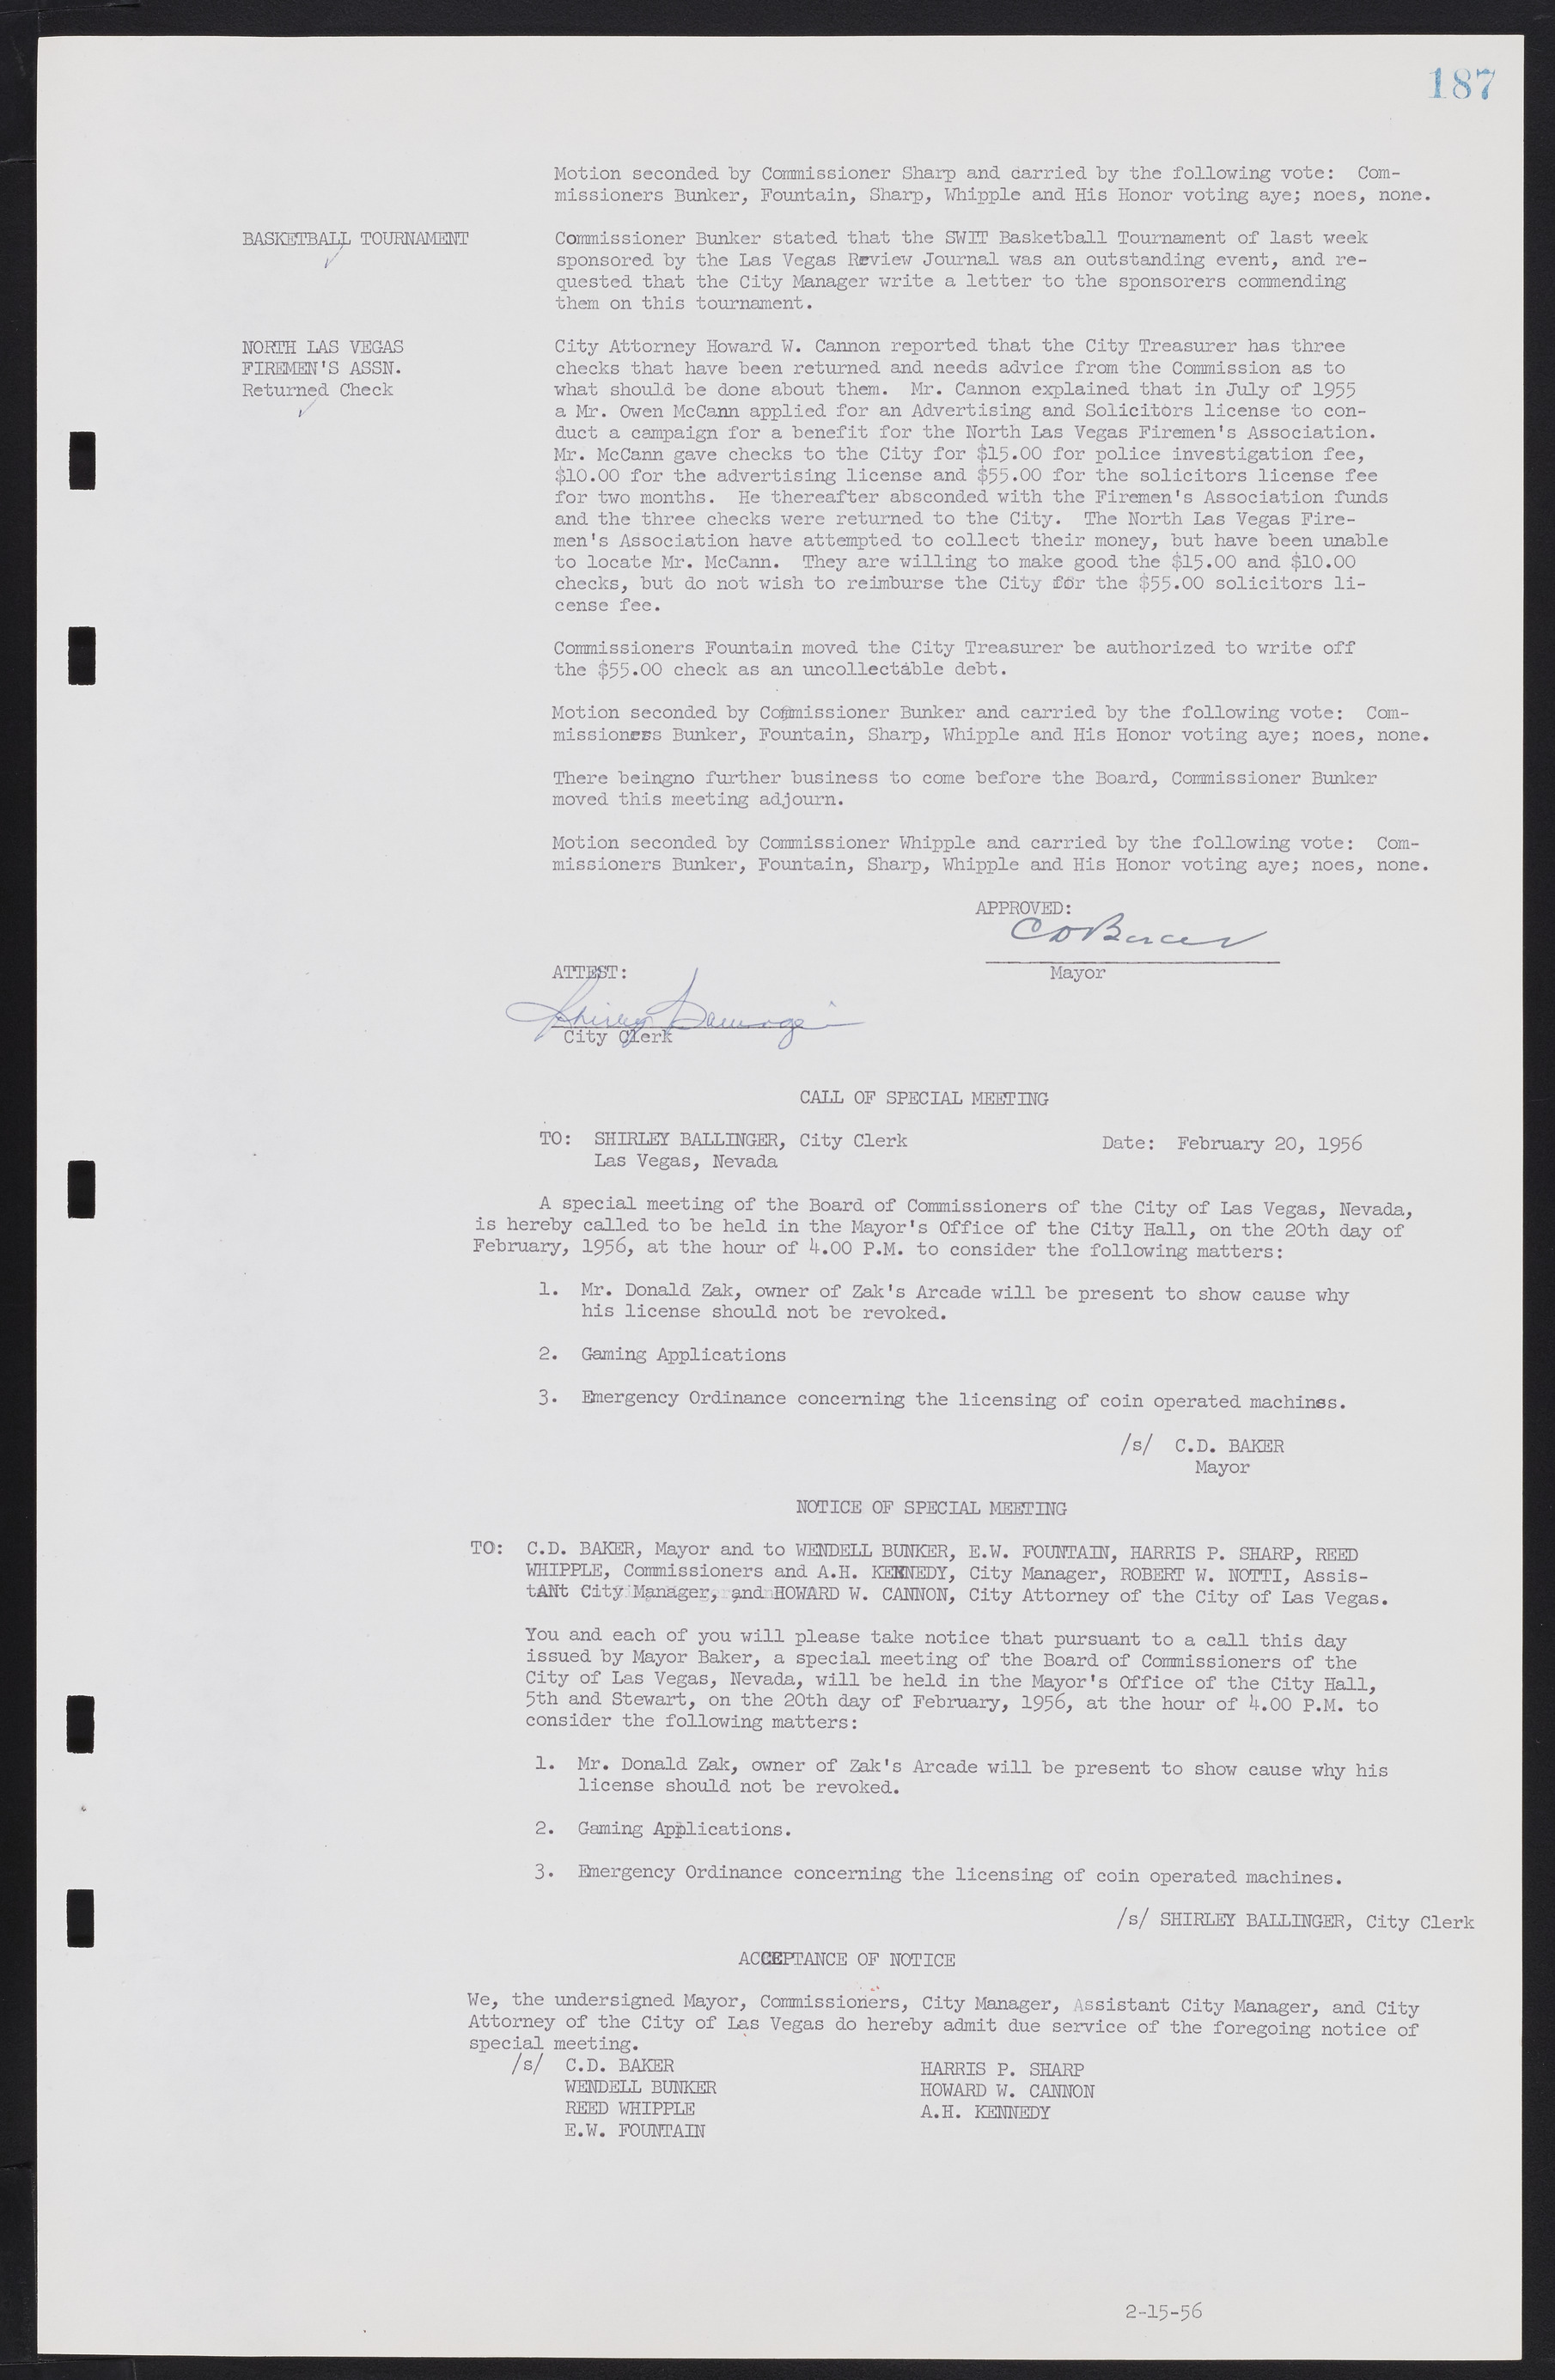 Las Vegas City Commission Minutes, September 21, 1955 to November 20, 1957, lvc000010-203